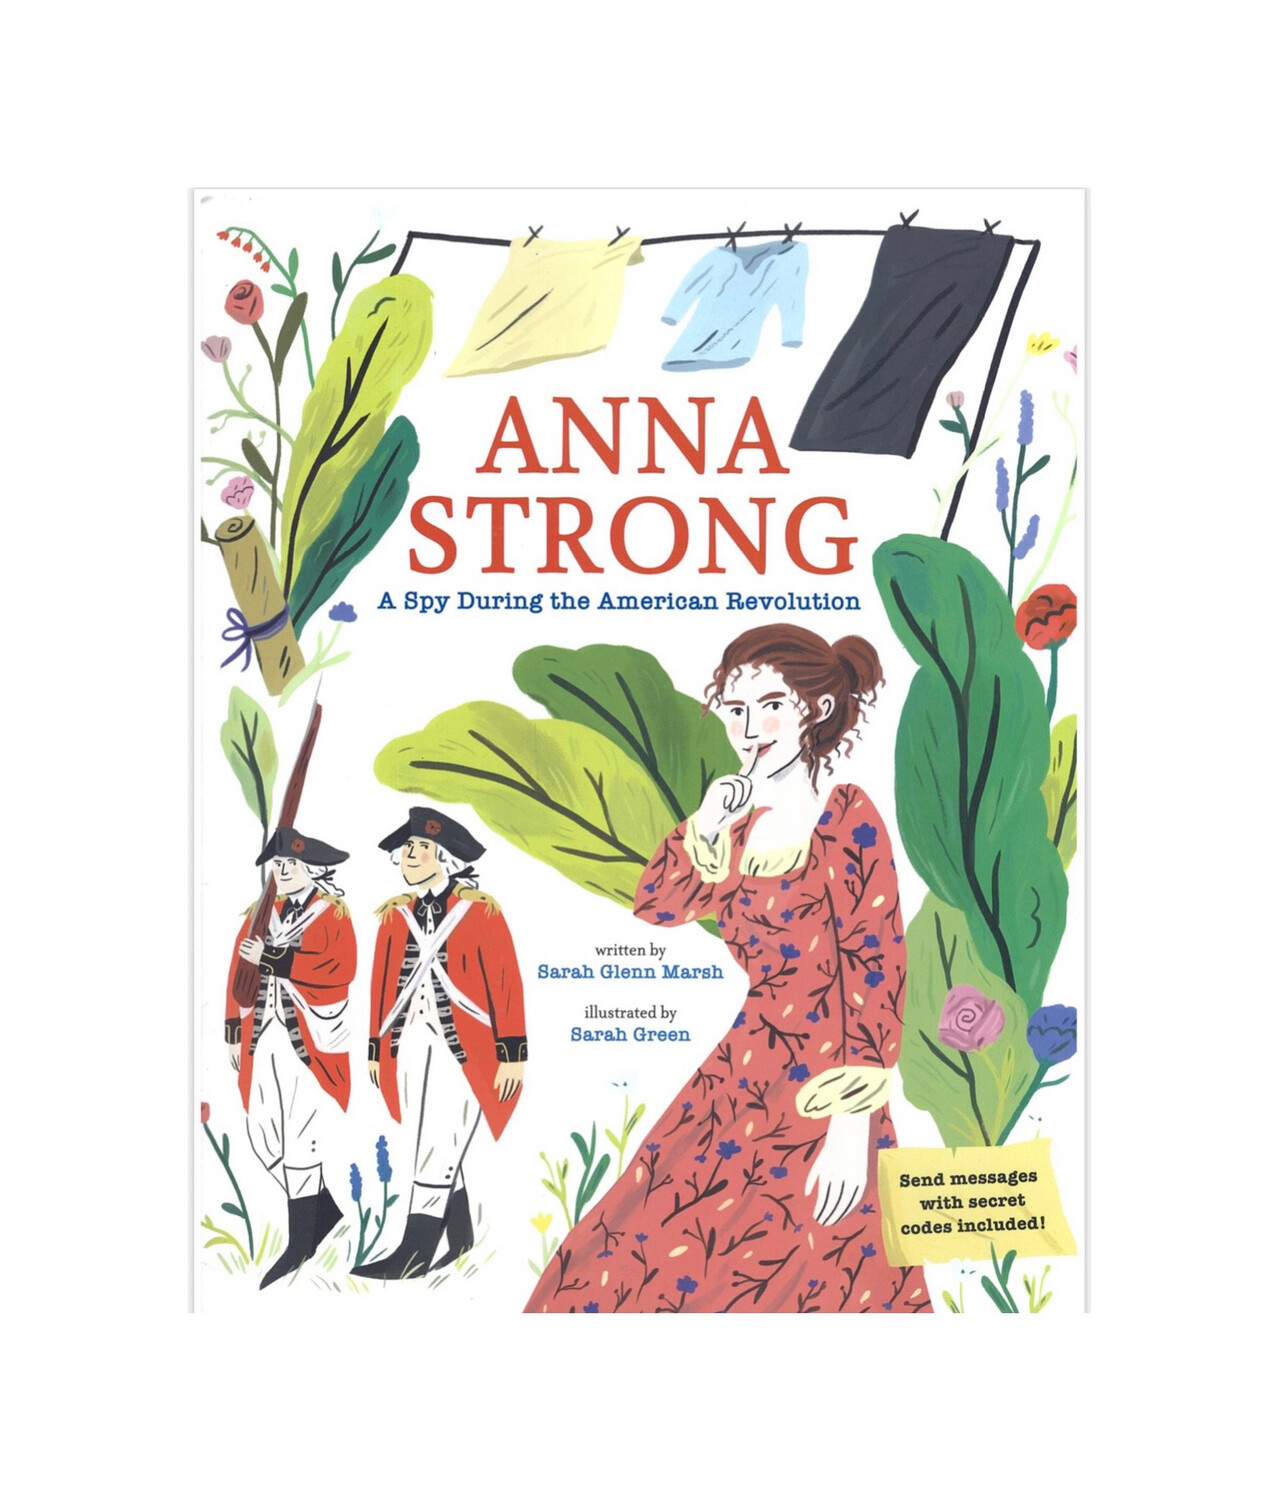 Anna Strong by Sarah Glenn Marsh